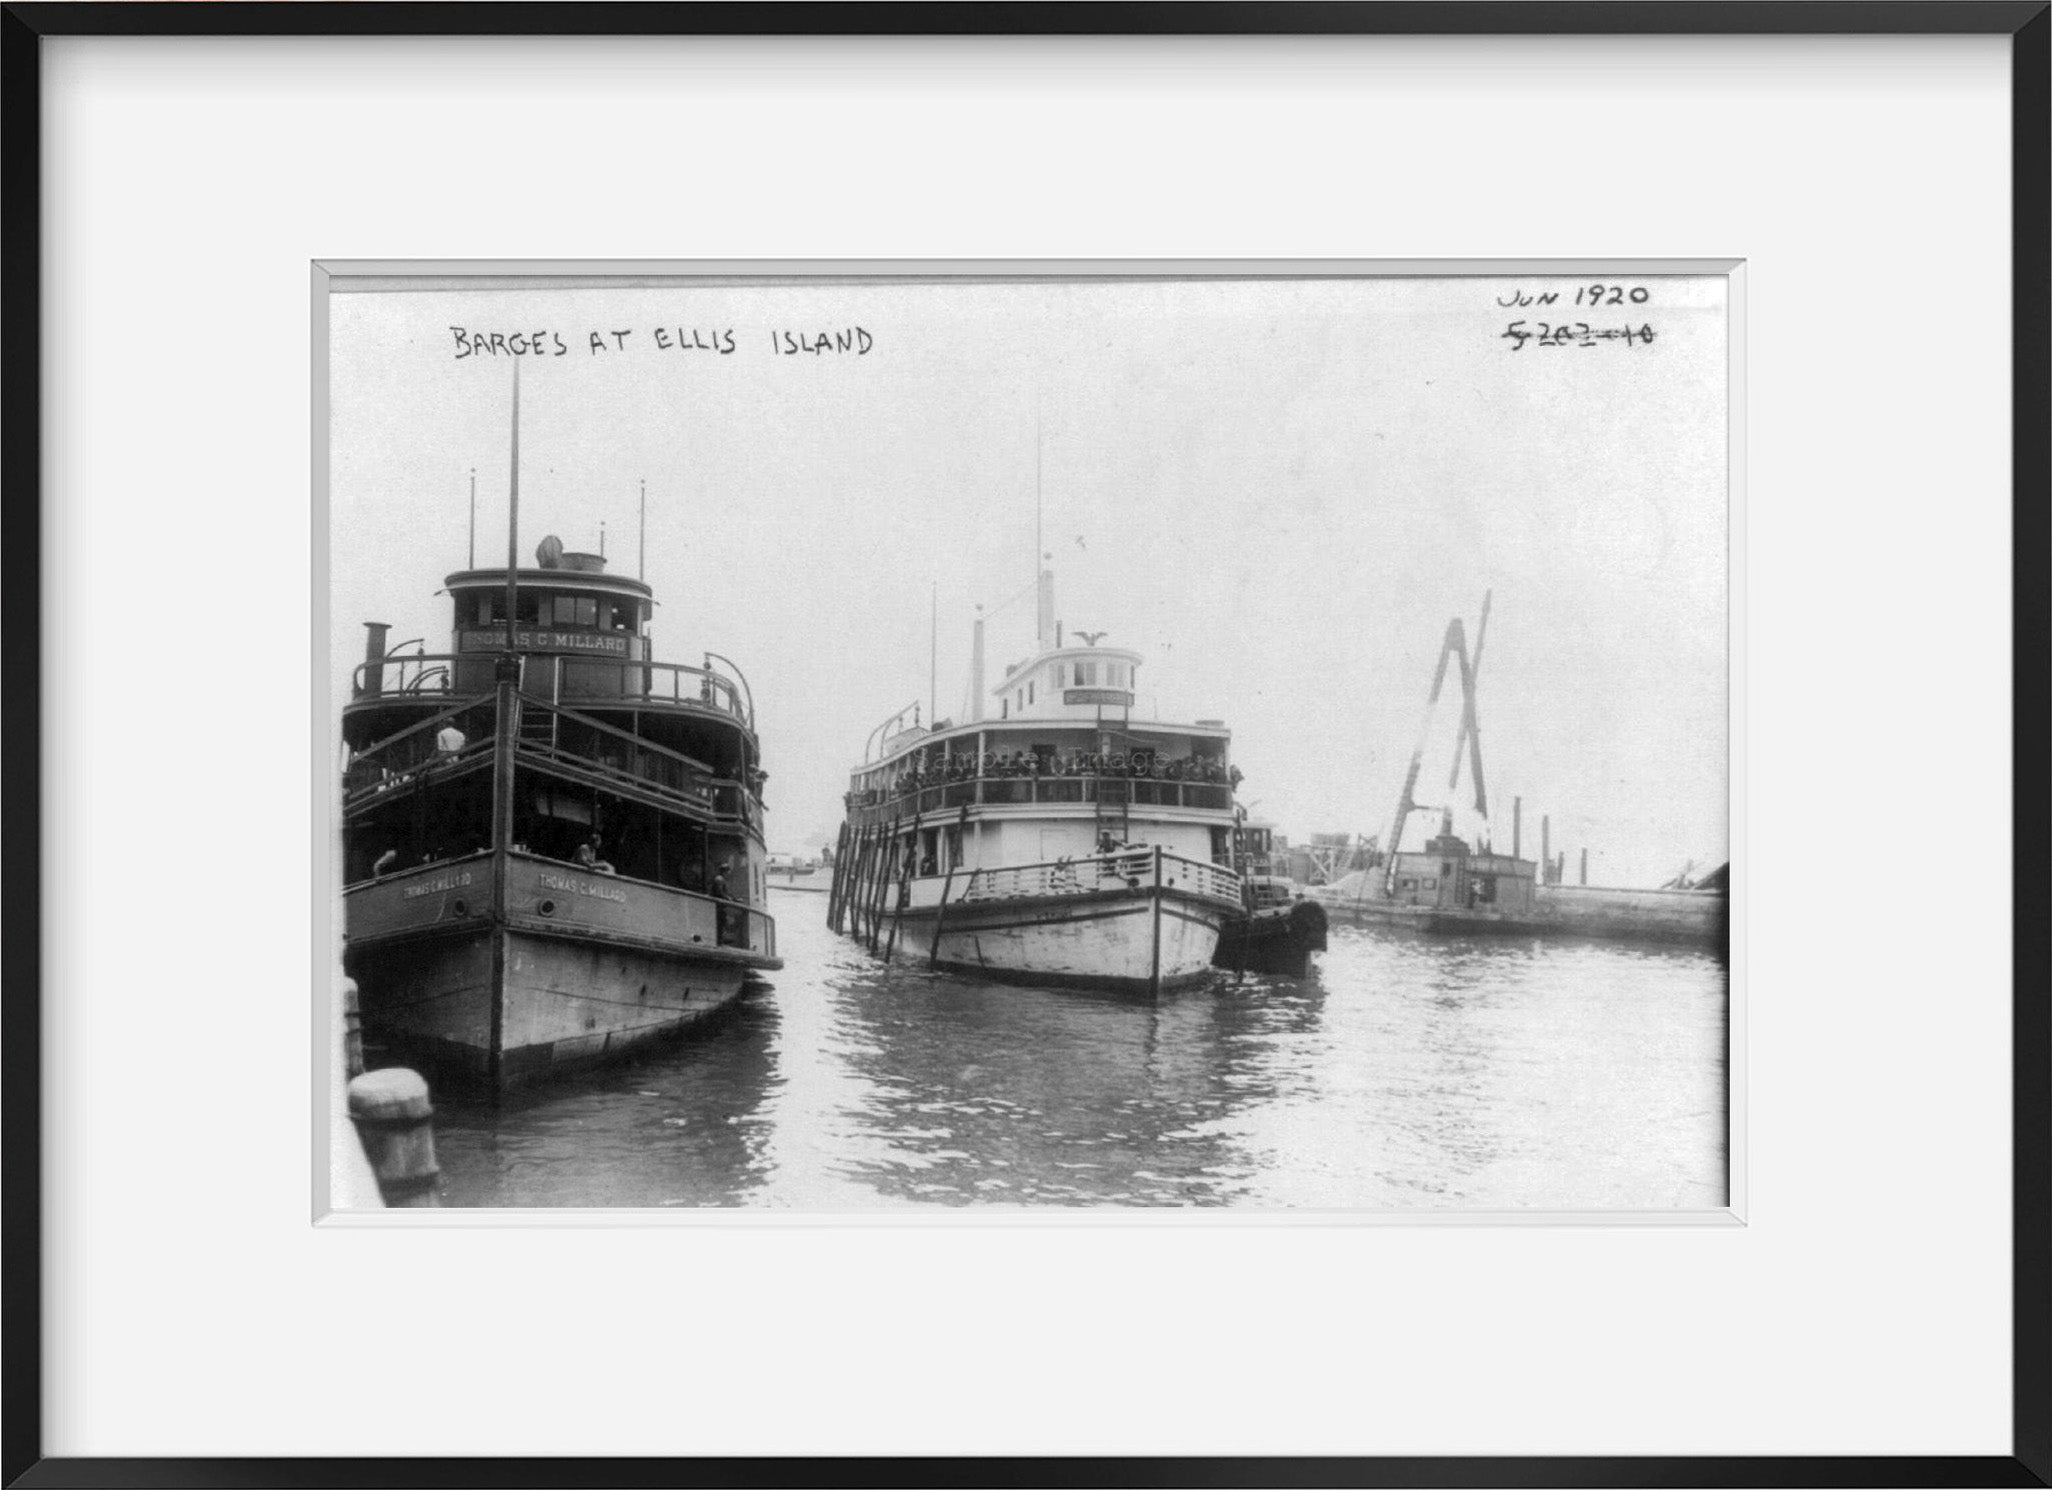 Photo: Barges i.e., ferry boats at Ellis Island, New York Harbor, NY, June 1920, immi